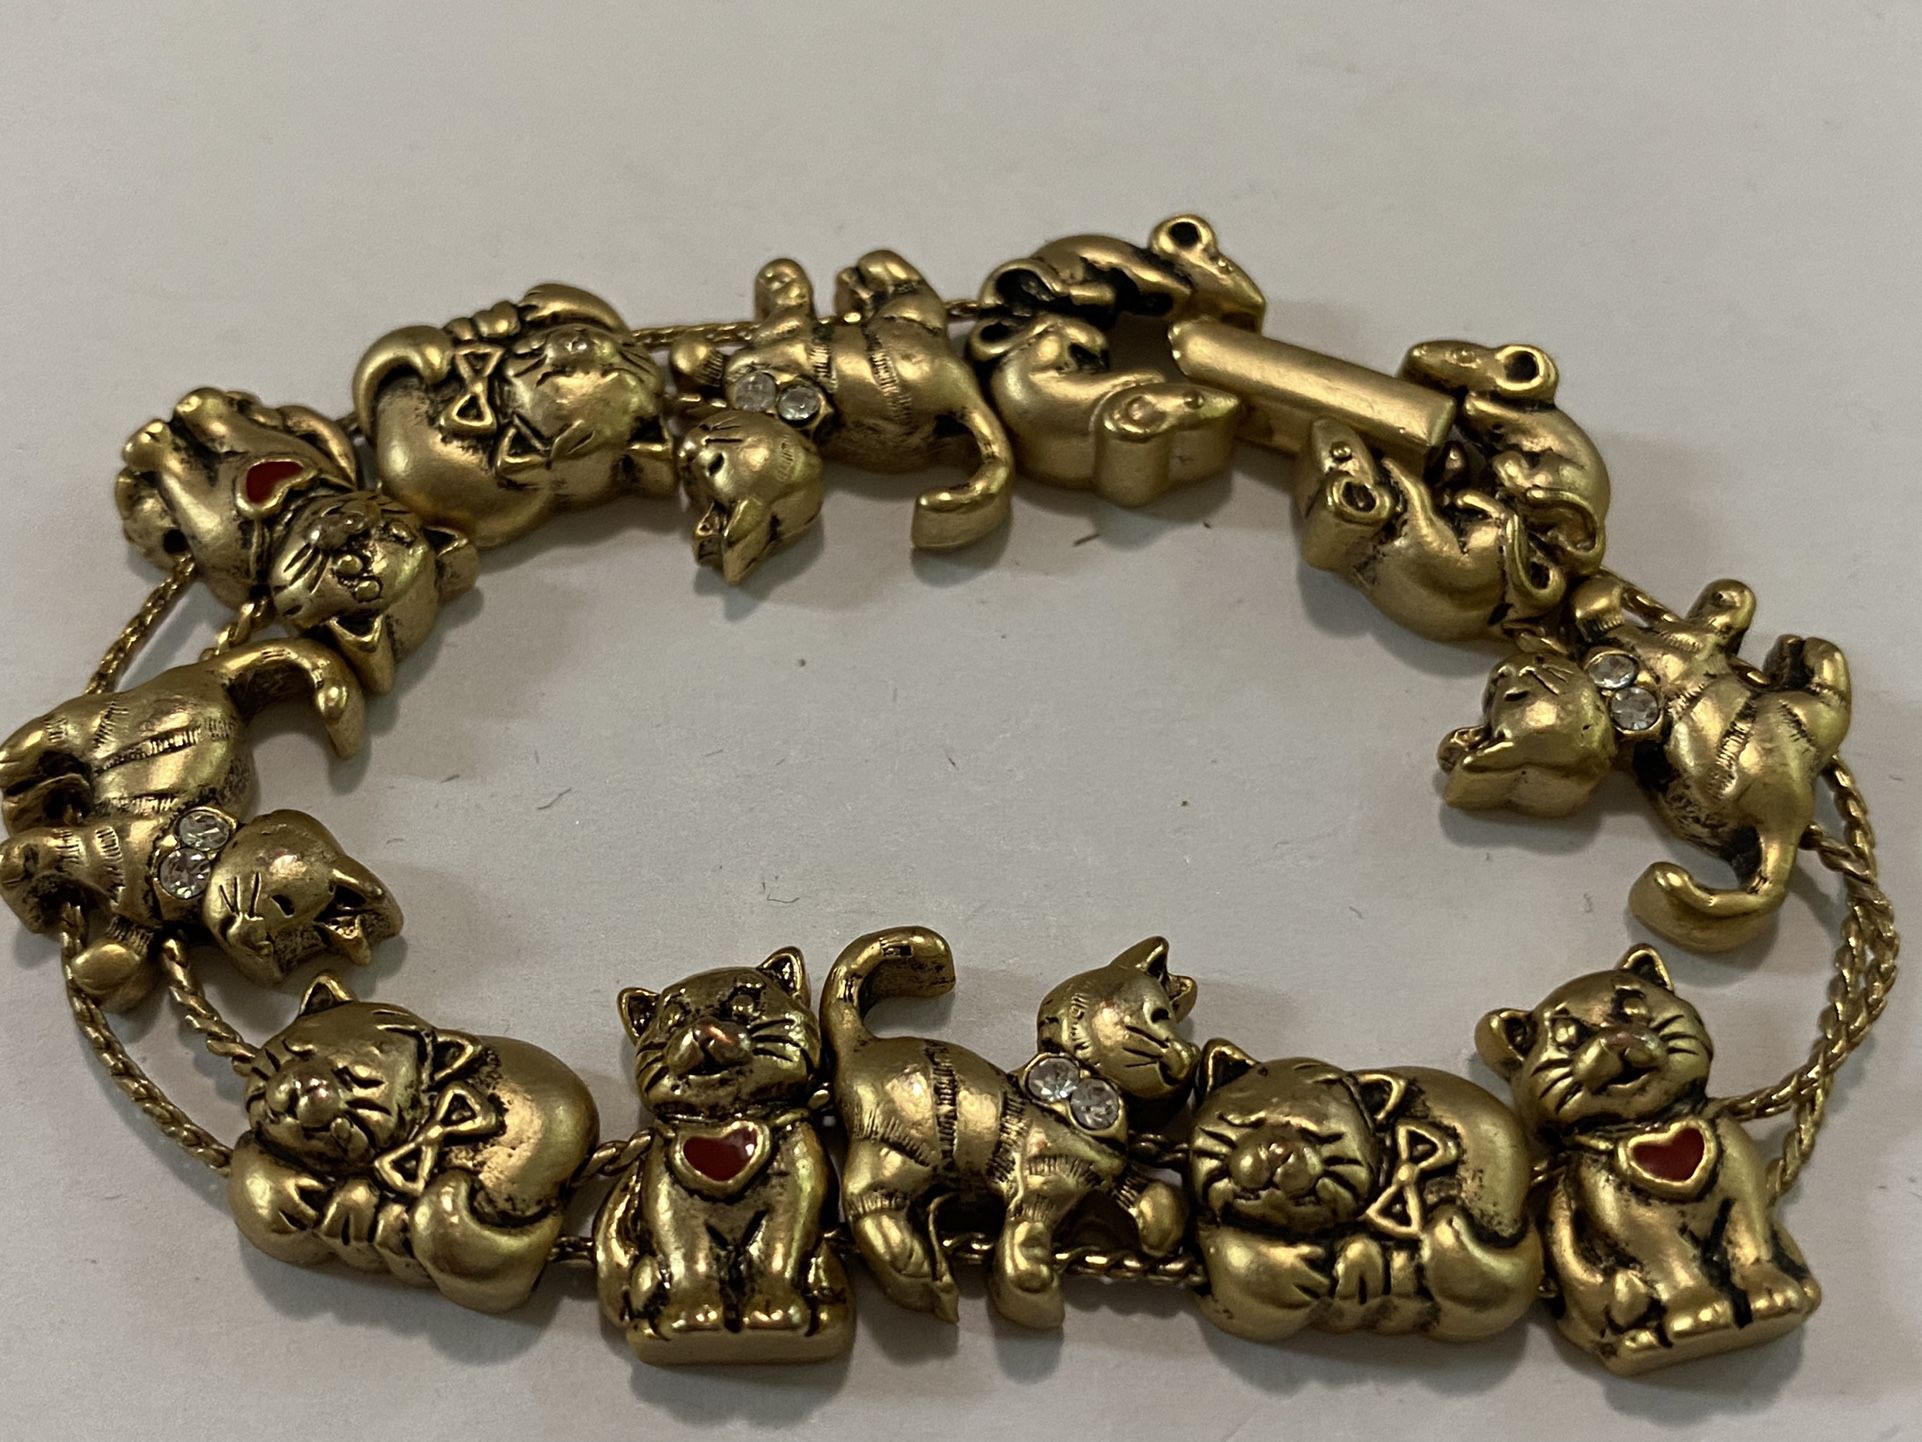 Vintage AVON Cats Sliding Charm Bracelet Gold Tone